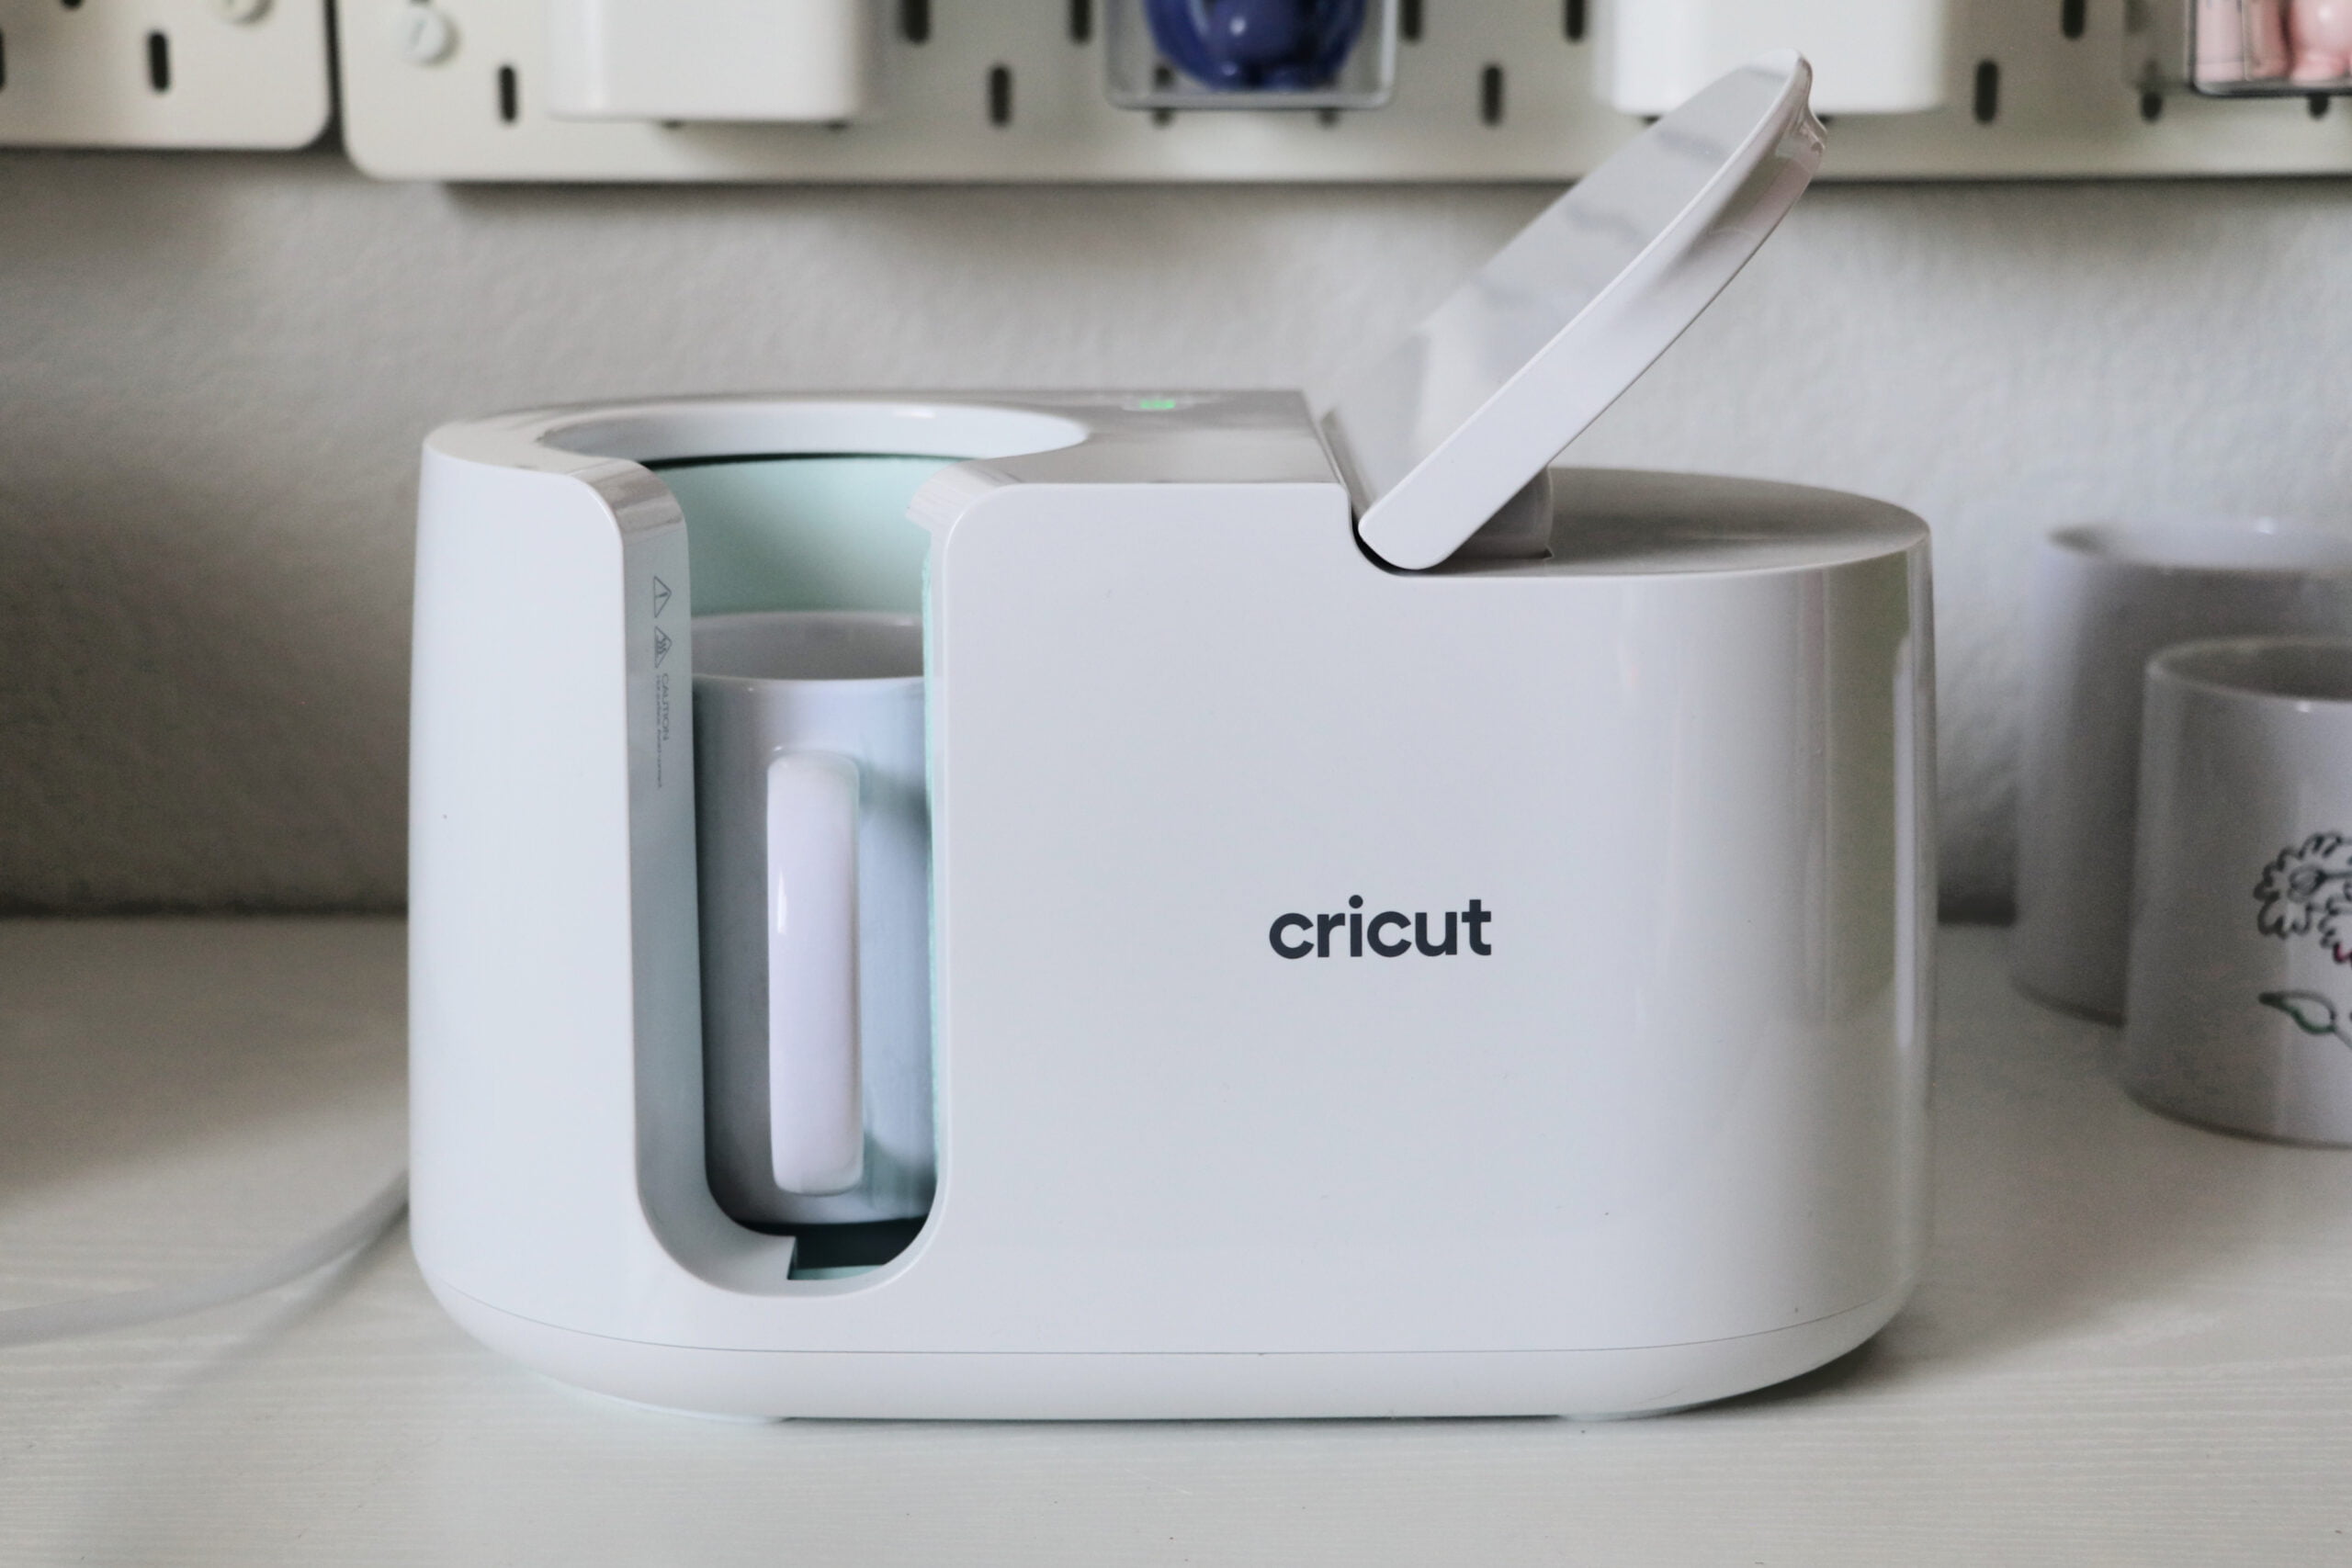 How to use Cricut Mug Press to create a fun thank-you gift